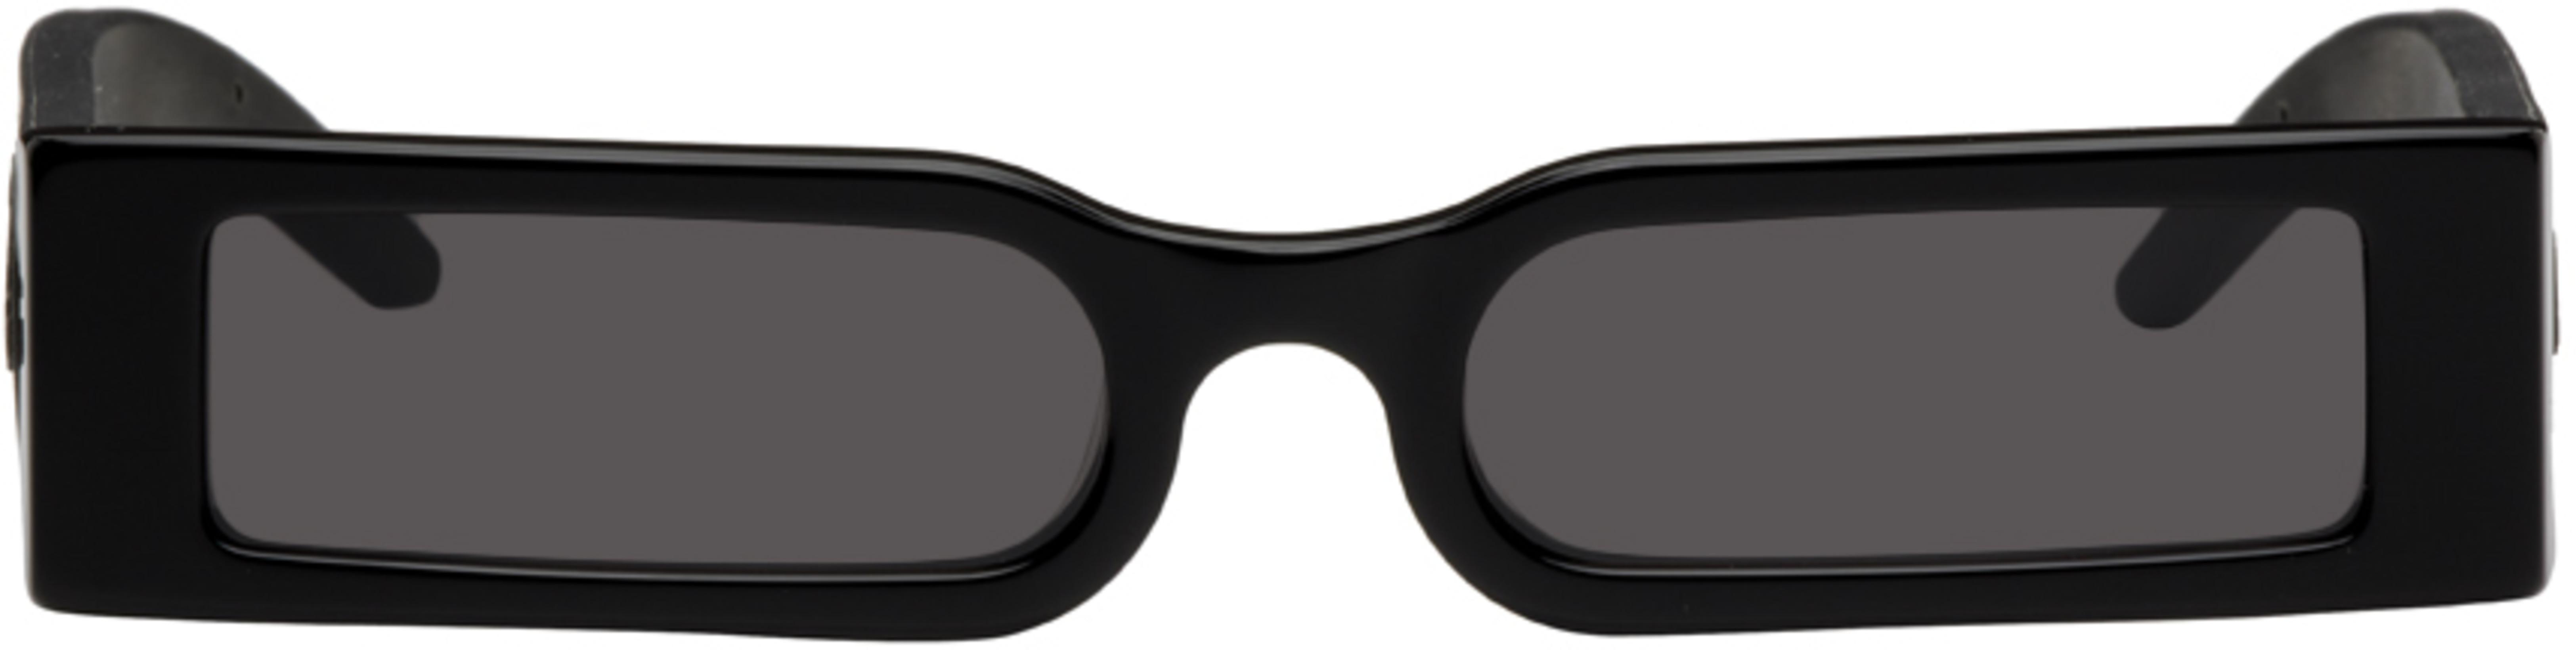 Black Roscos Sunglasses by A BETTER FEELING